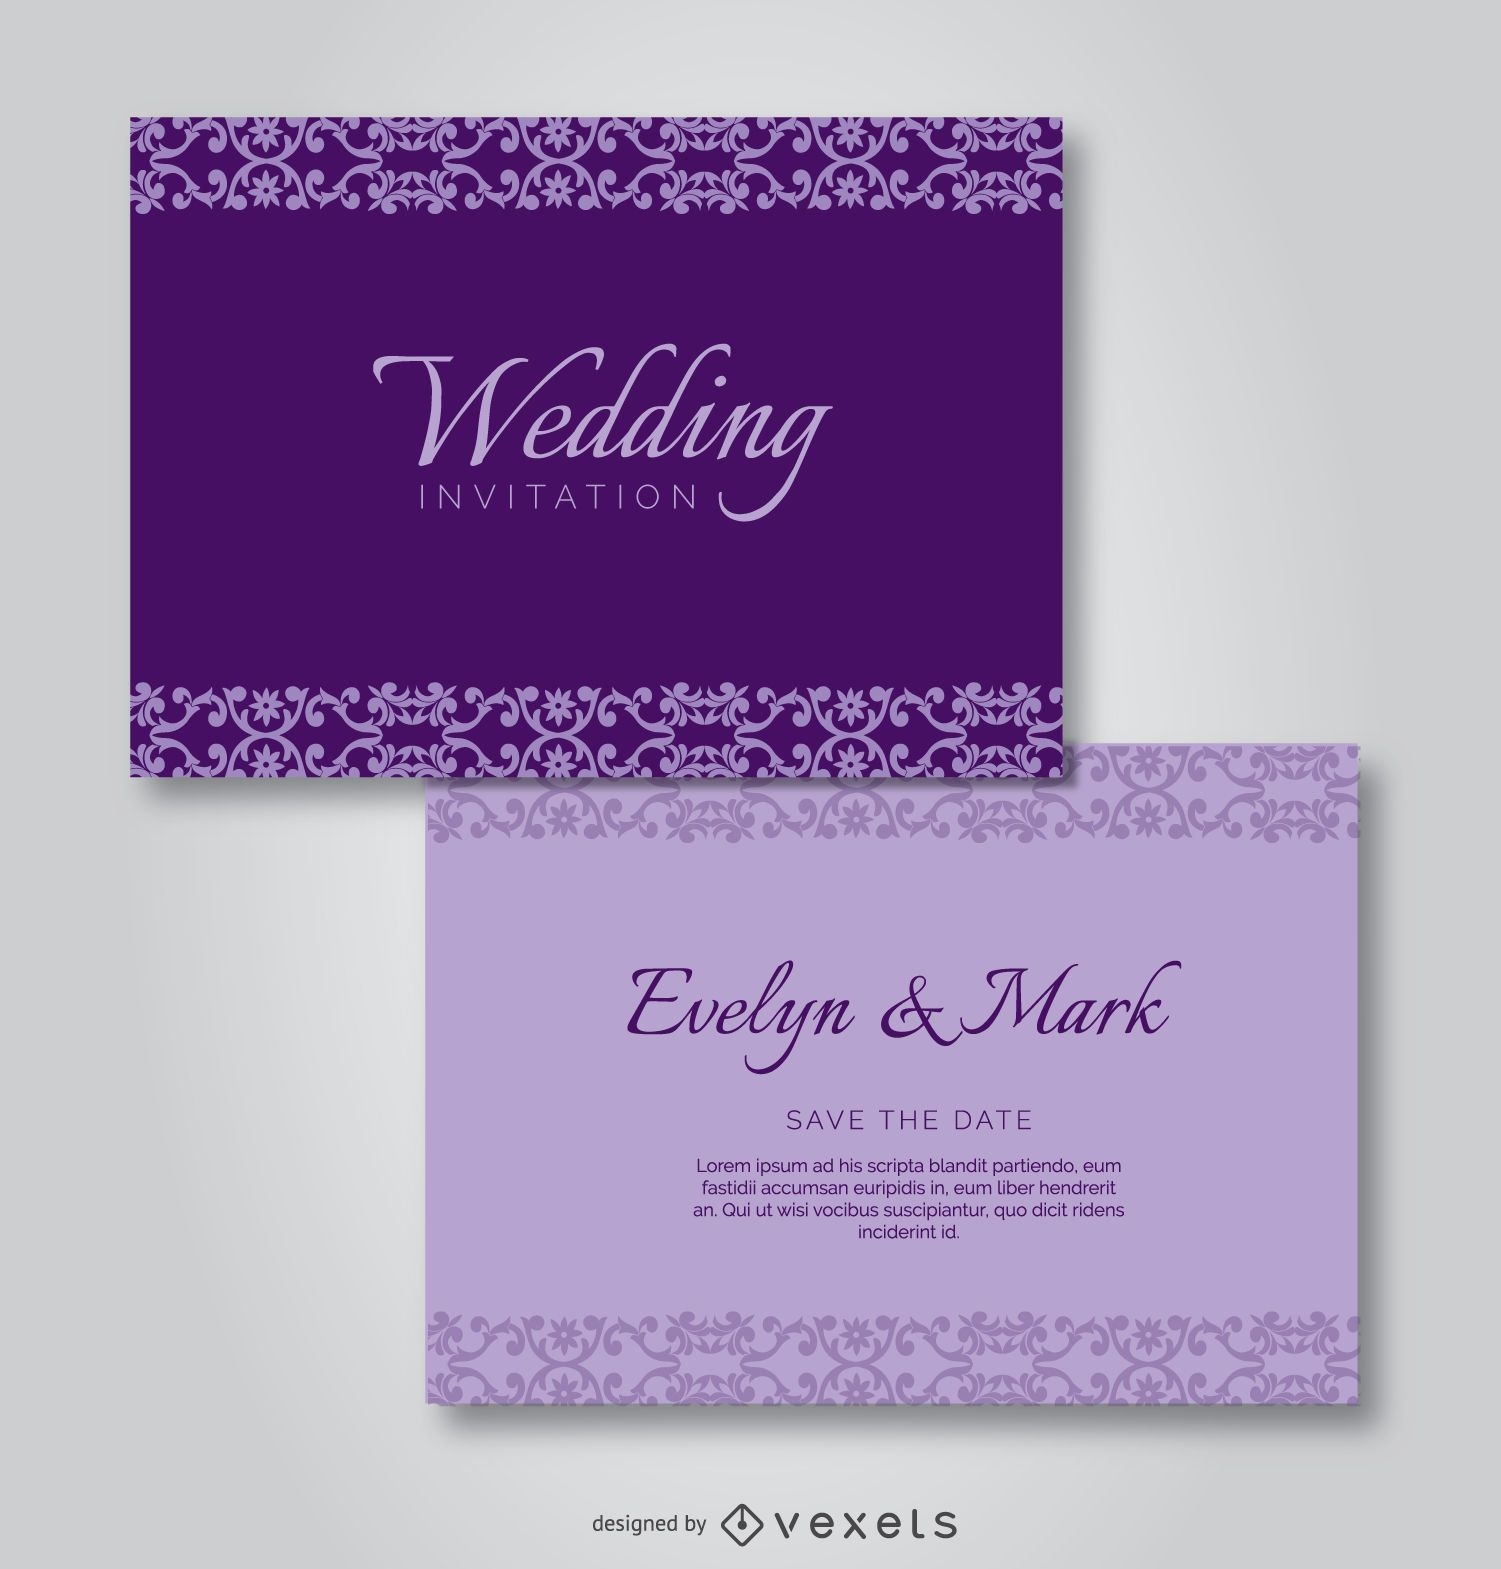 Invitación de boda elegante púrpura